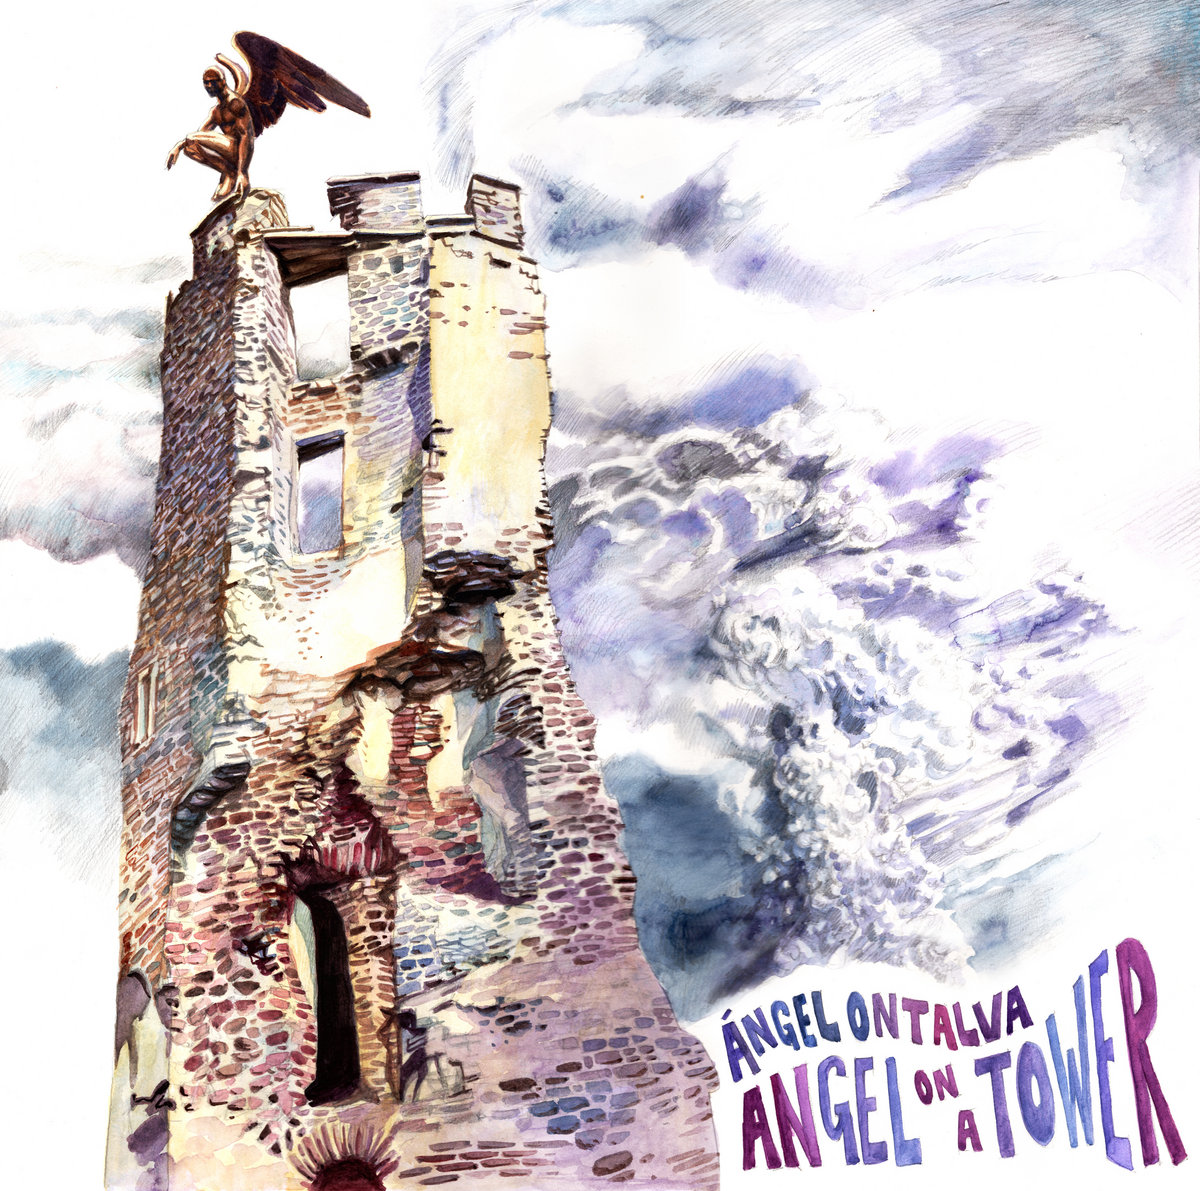 Angel on a tower / official CD | Ángel Ontalva | octoberXart records